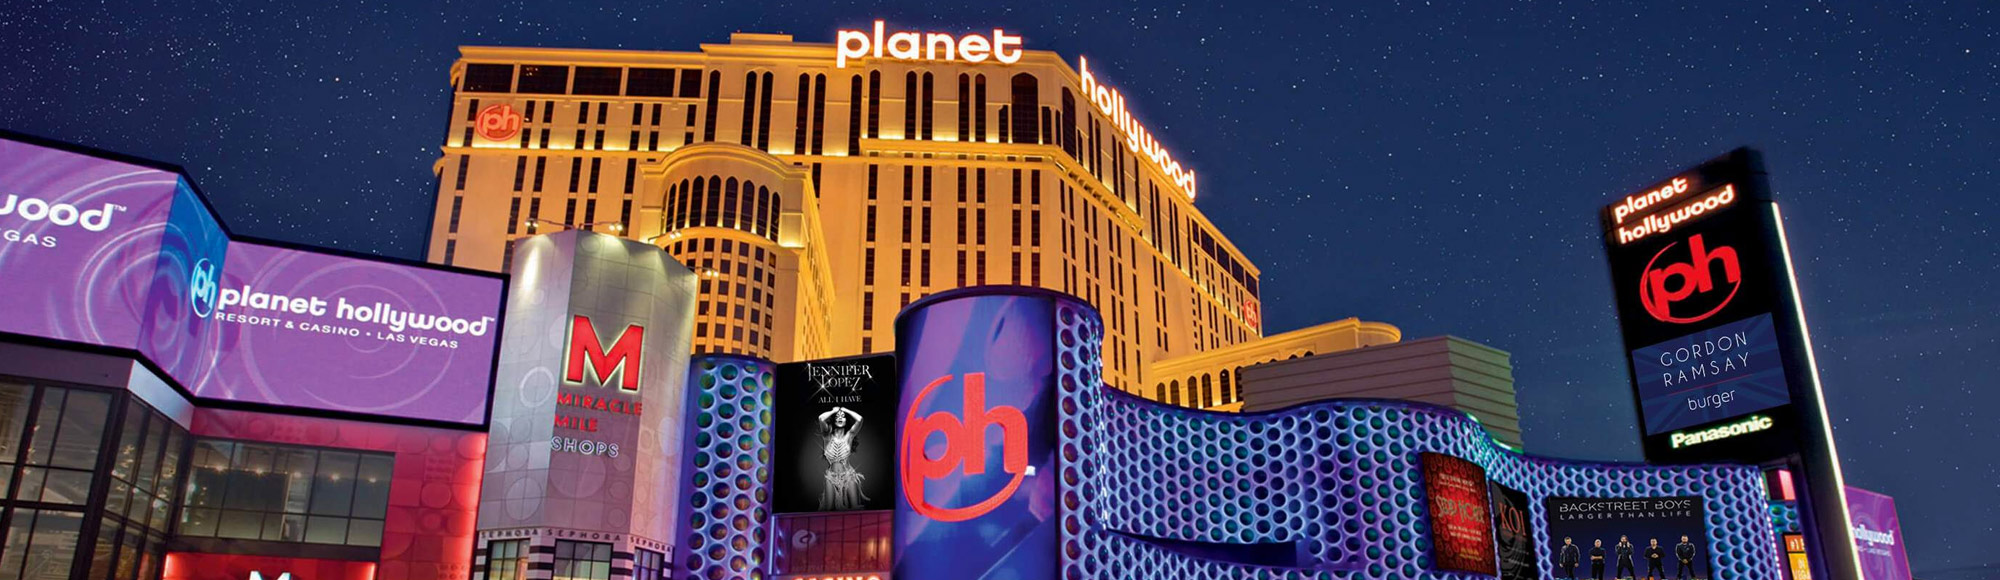 Planet Hollywood Hotel In Las Vegas Vegas Com